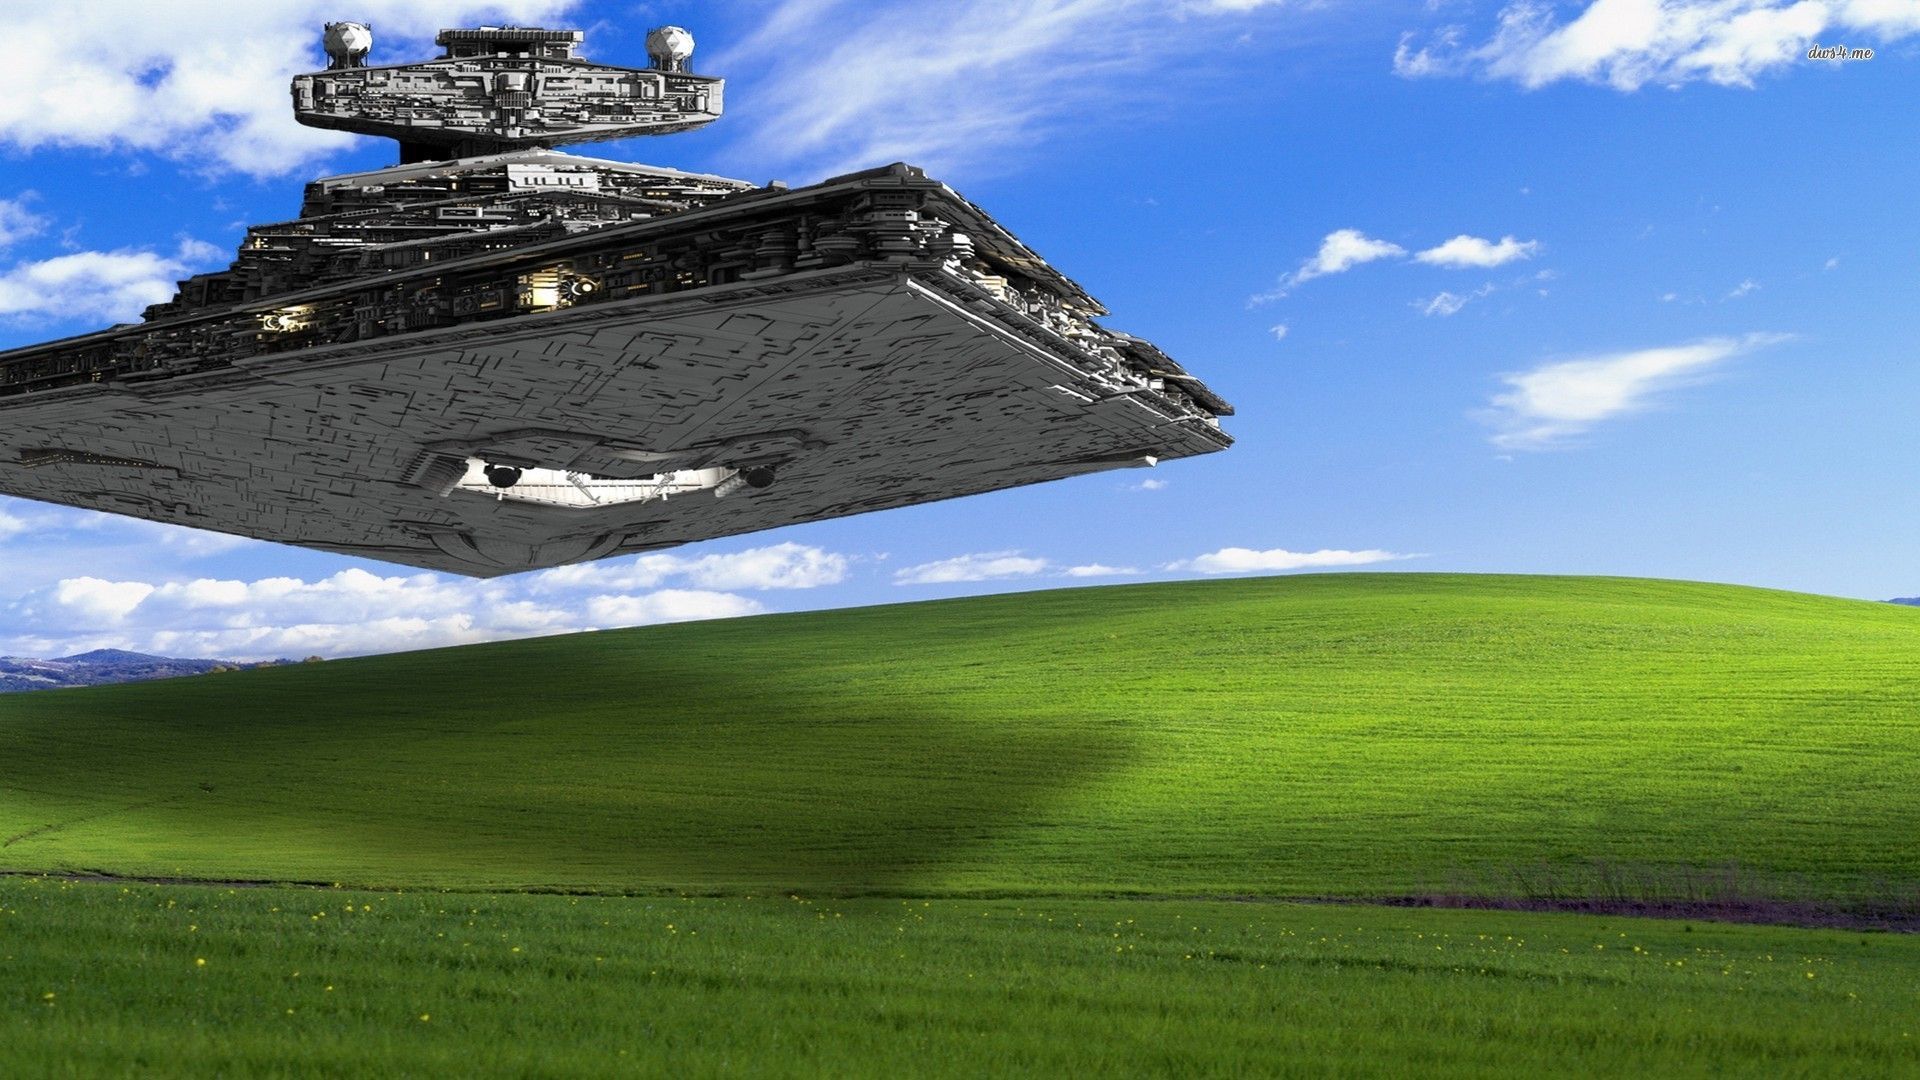 Star Wars ship above the green hill wallpaper - Digital Art ...